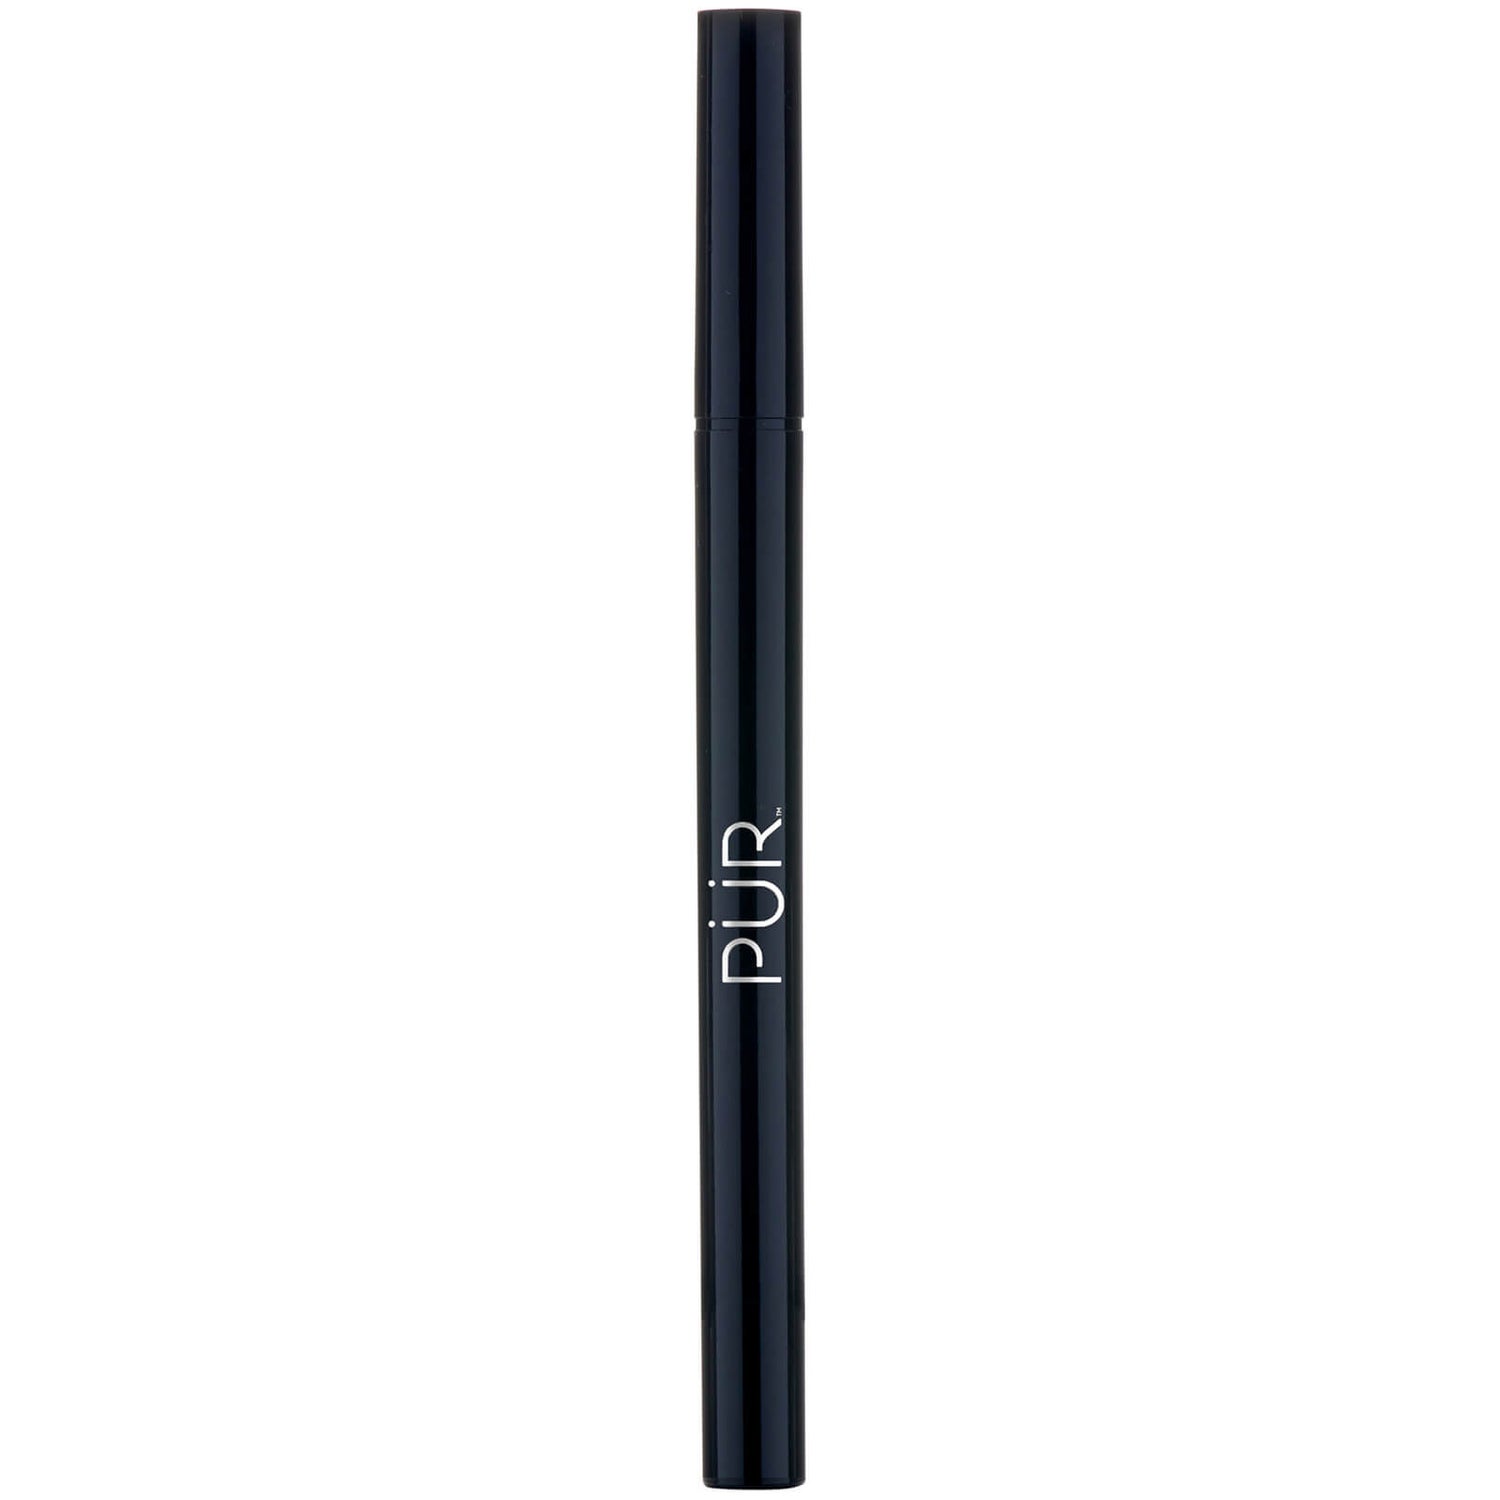 PÜR On Point Waterproof Liquid Eyeliner Pen - Black 0.55ml